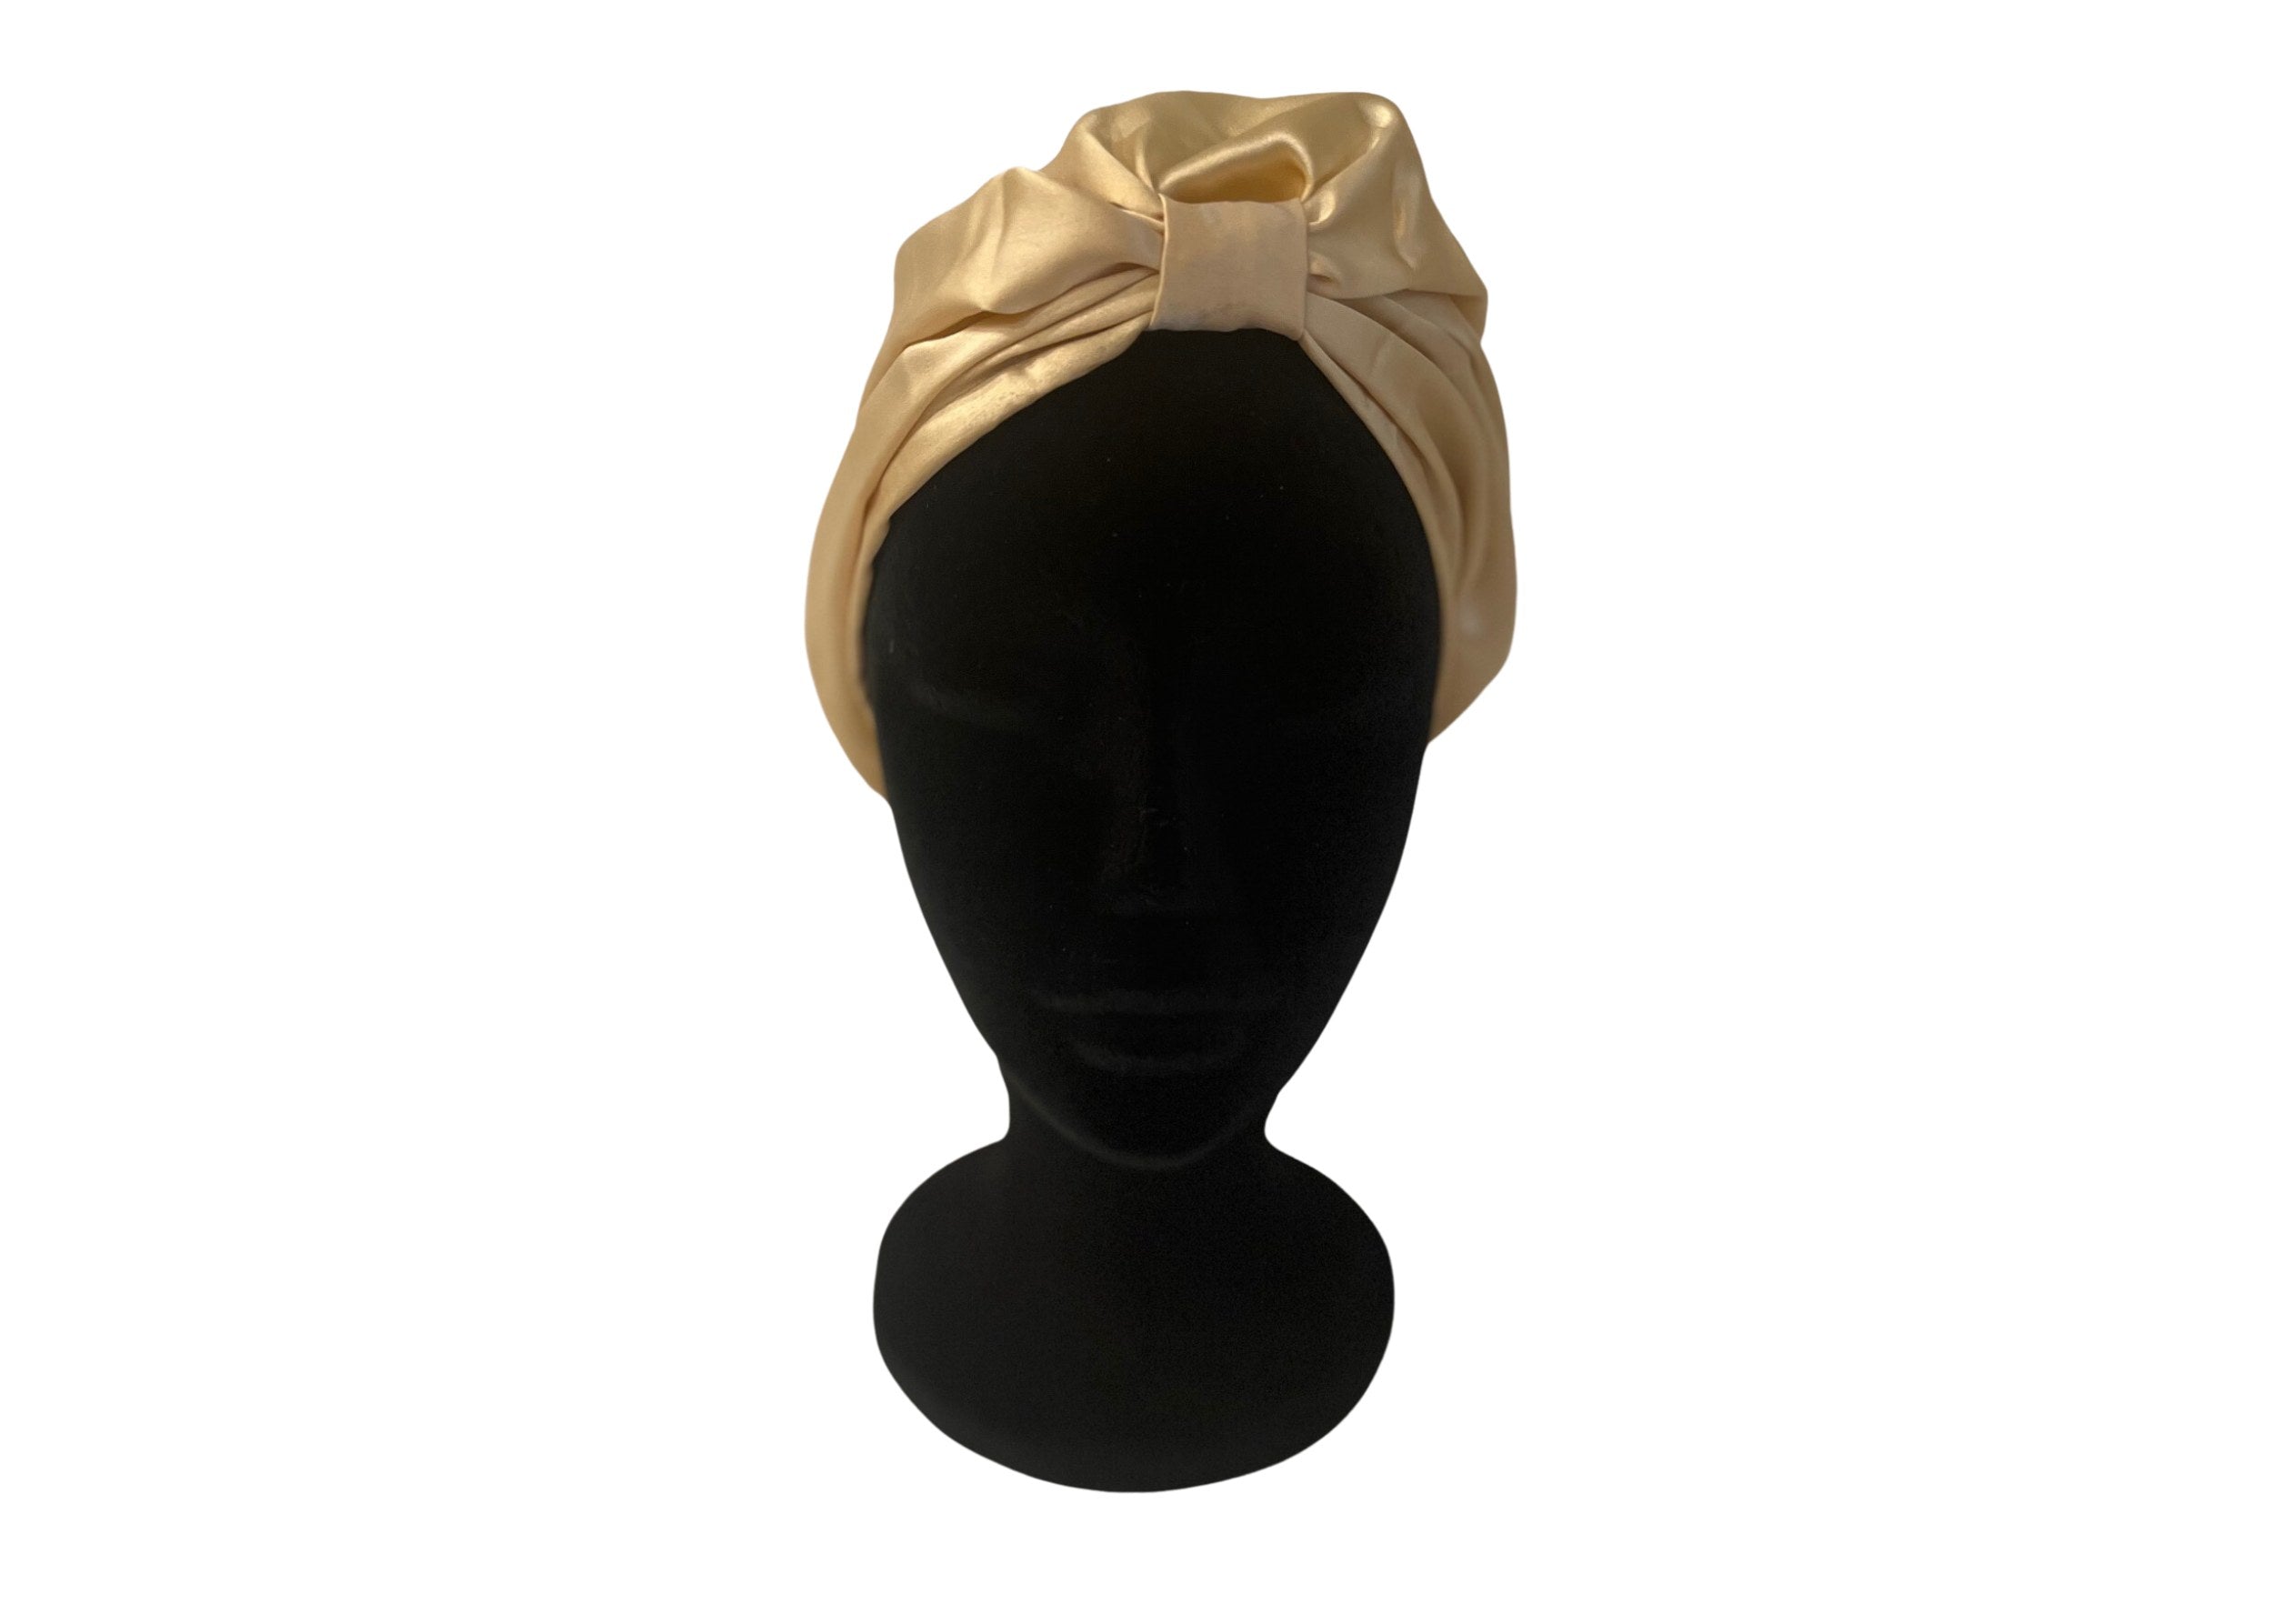  Gold Square Silk Night Cap/Bonnet - Gold Square Silk Night Cap/Bonnet -  -  - Luxurious Fine Silk by Forsters Finery